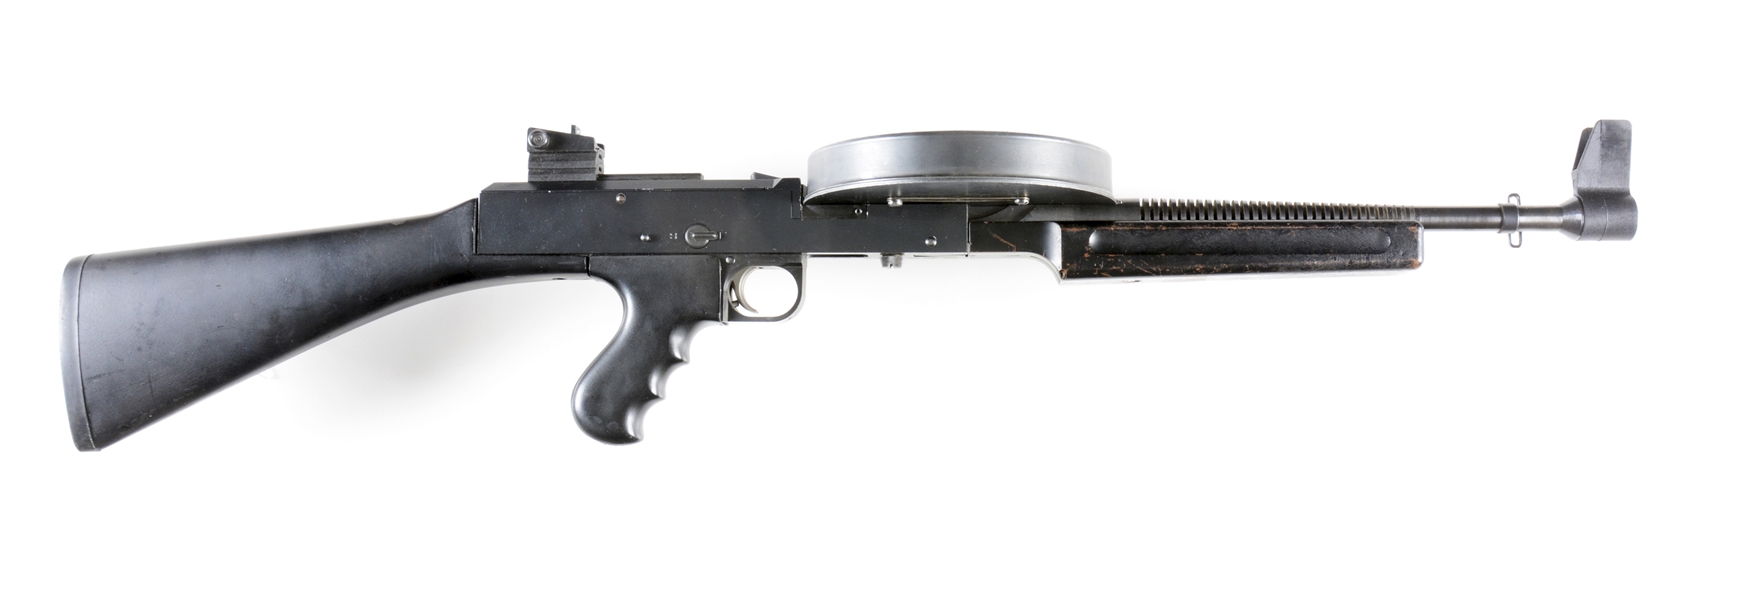 (N) AMERICAN ARMS M2 AMERICAN 180 MACHINE GUN (PRE-86 DEALER SAMPLE).